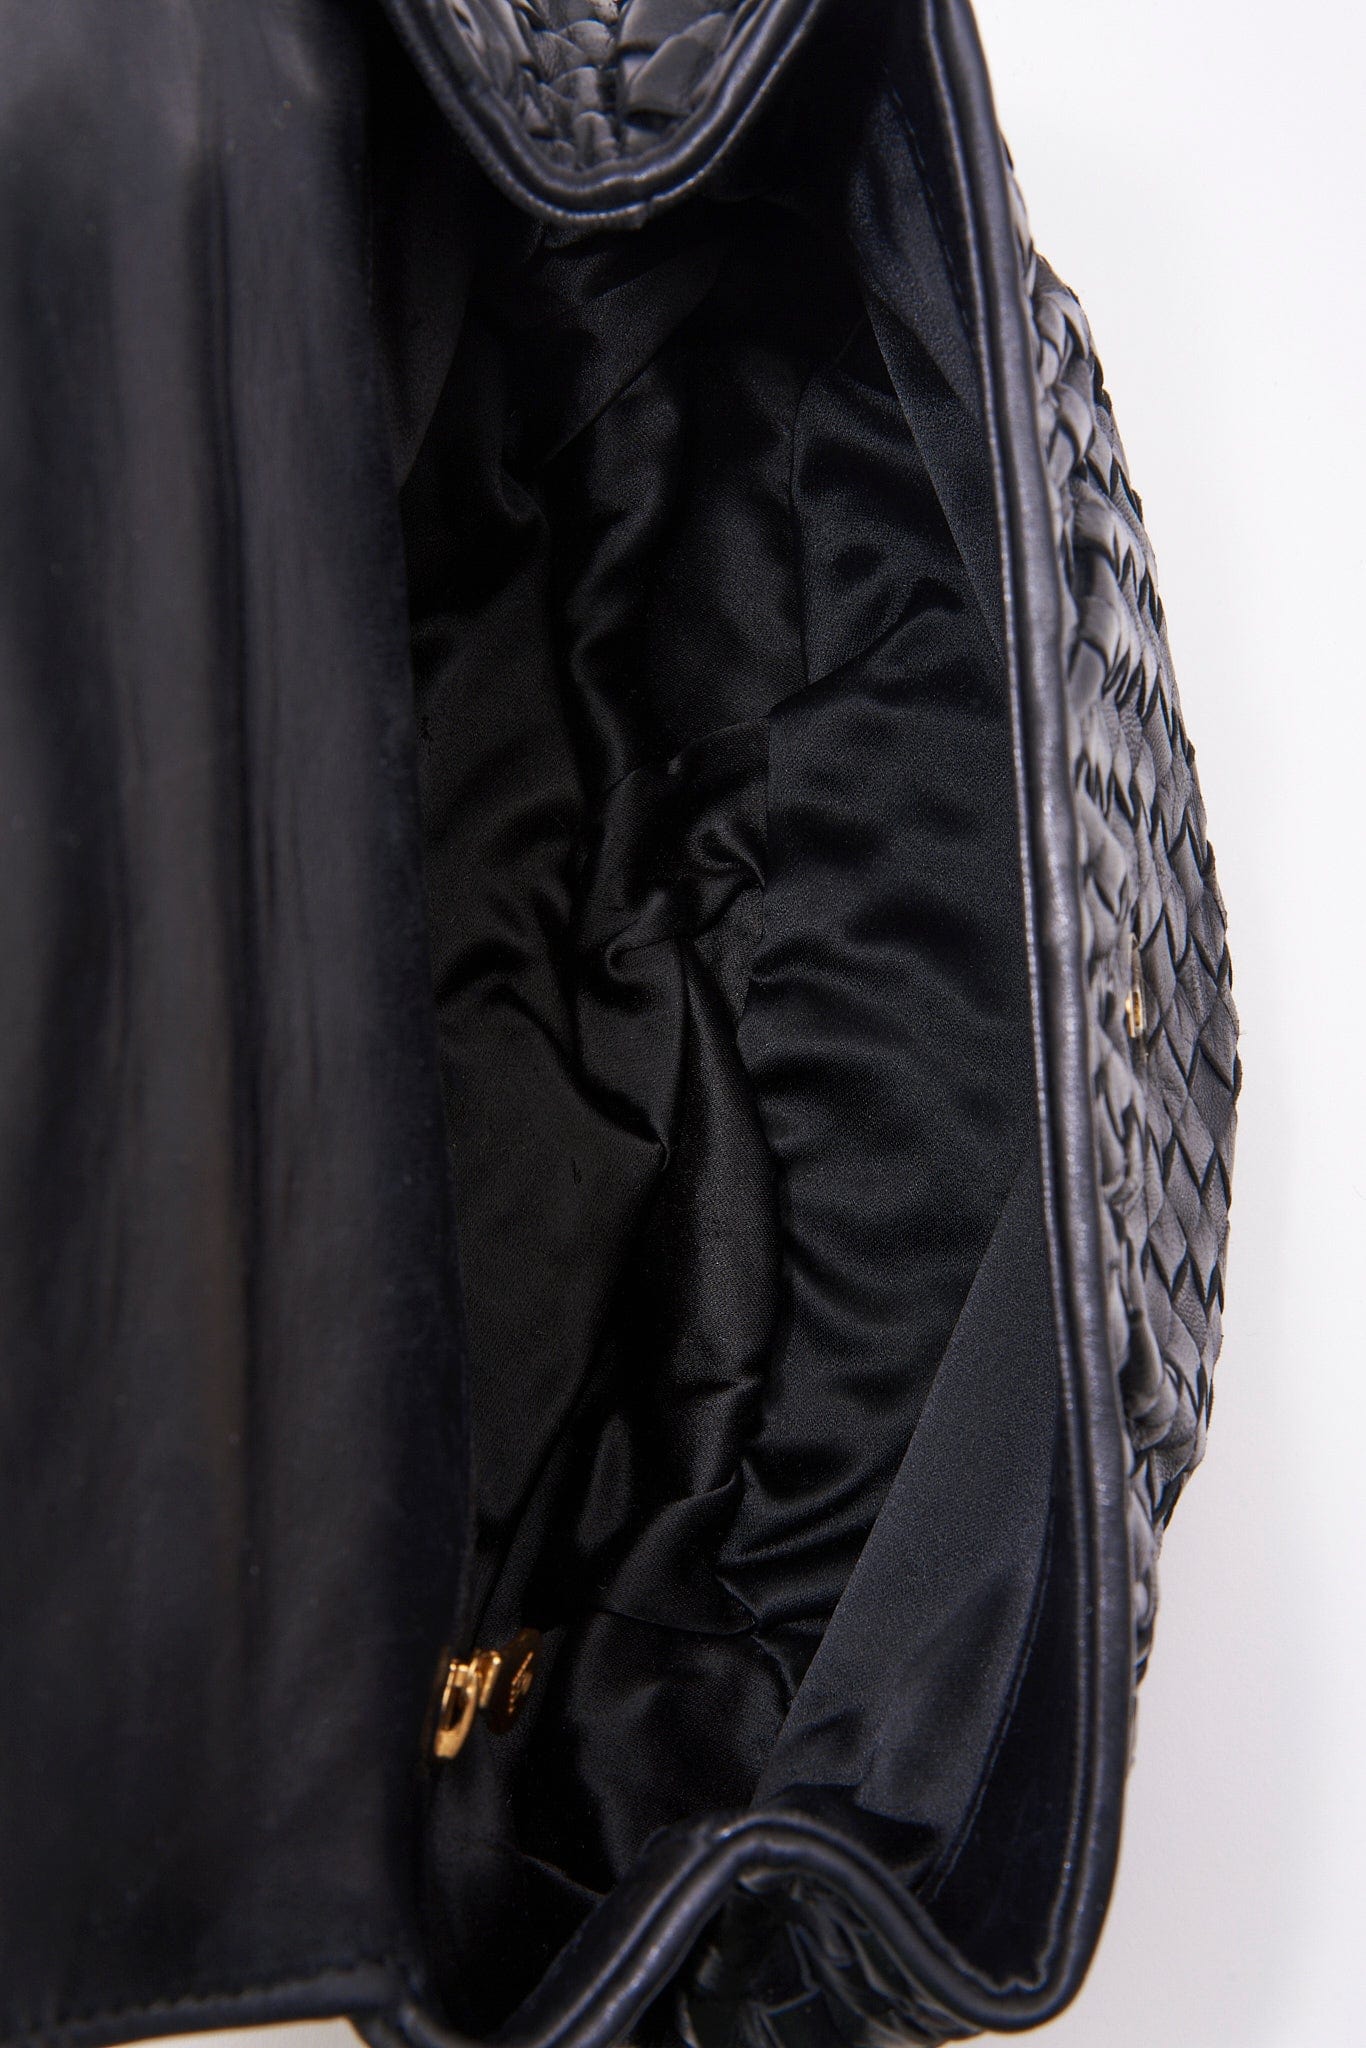 Vintage Bottega Veneta Black Intrecciato Leather Top Handle Bag